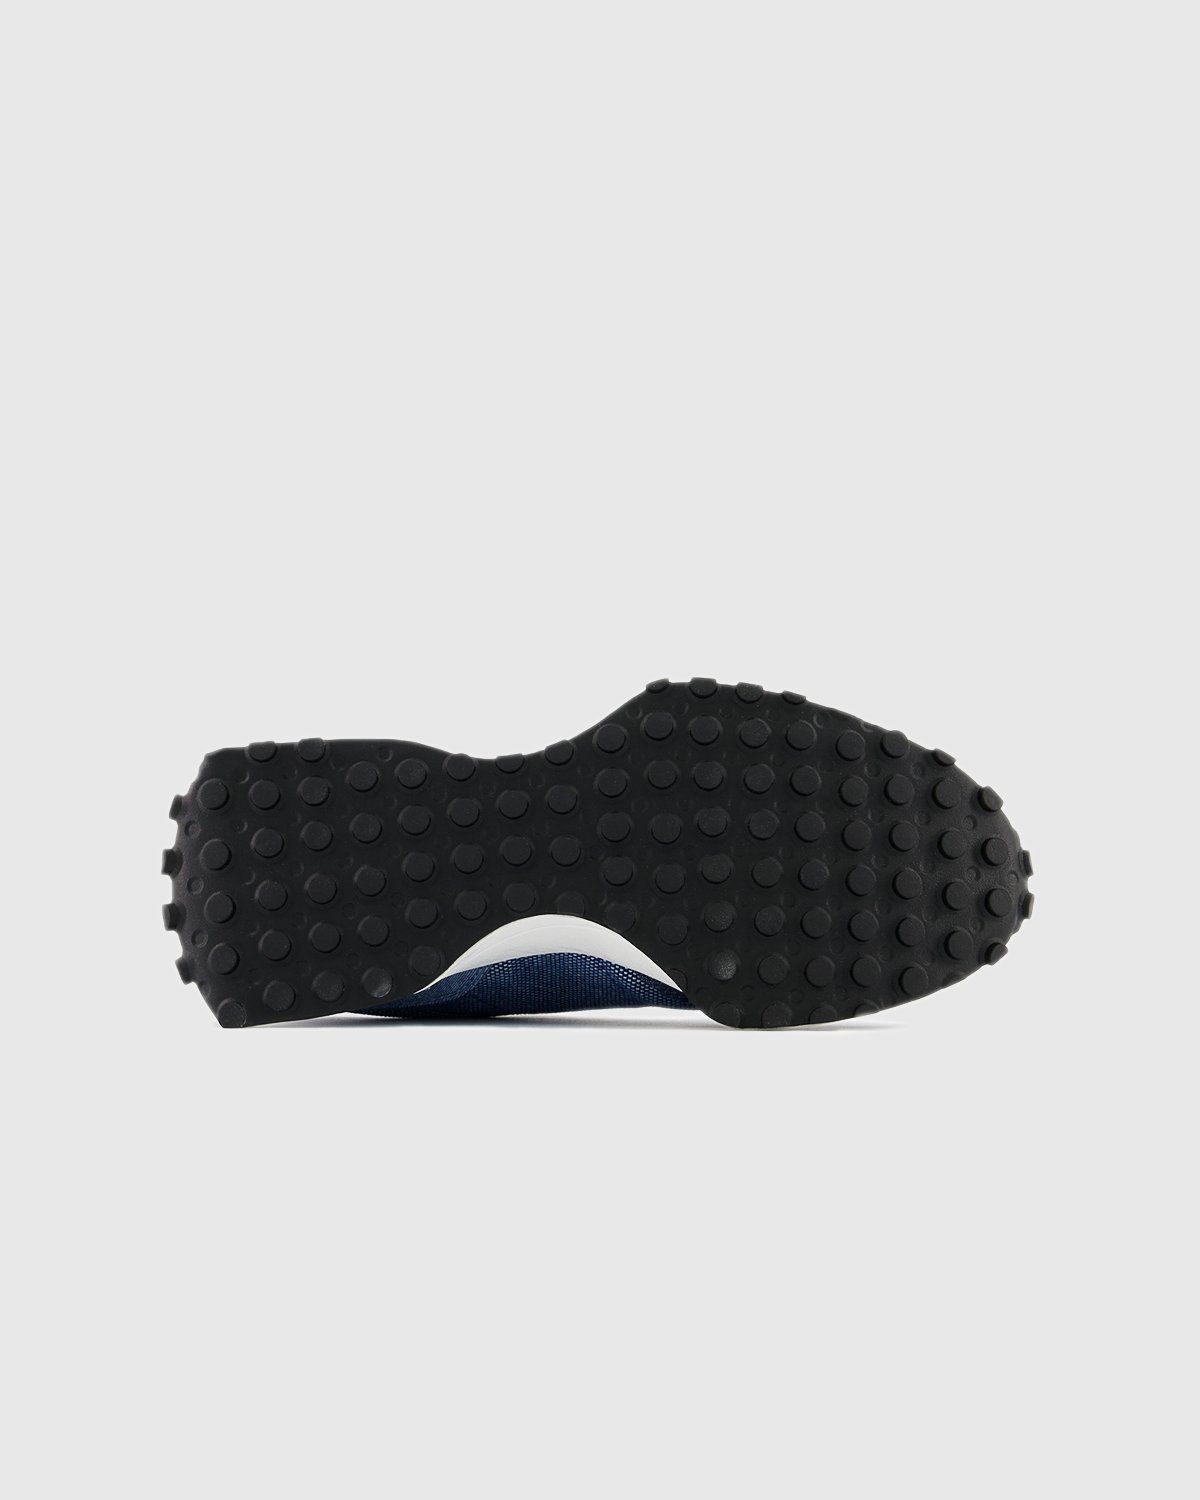 New Balance – MS327 Navy/Denim - Low Top Sneakers - Blue - Image 7